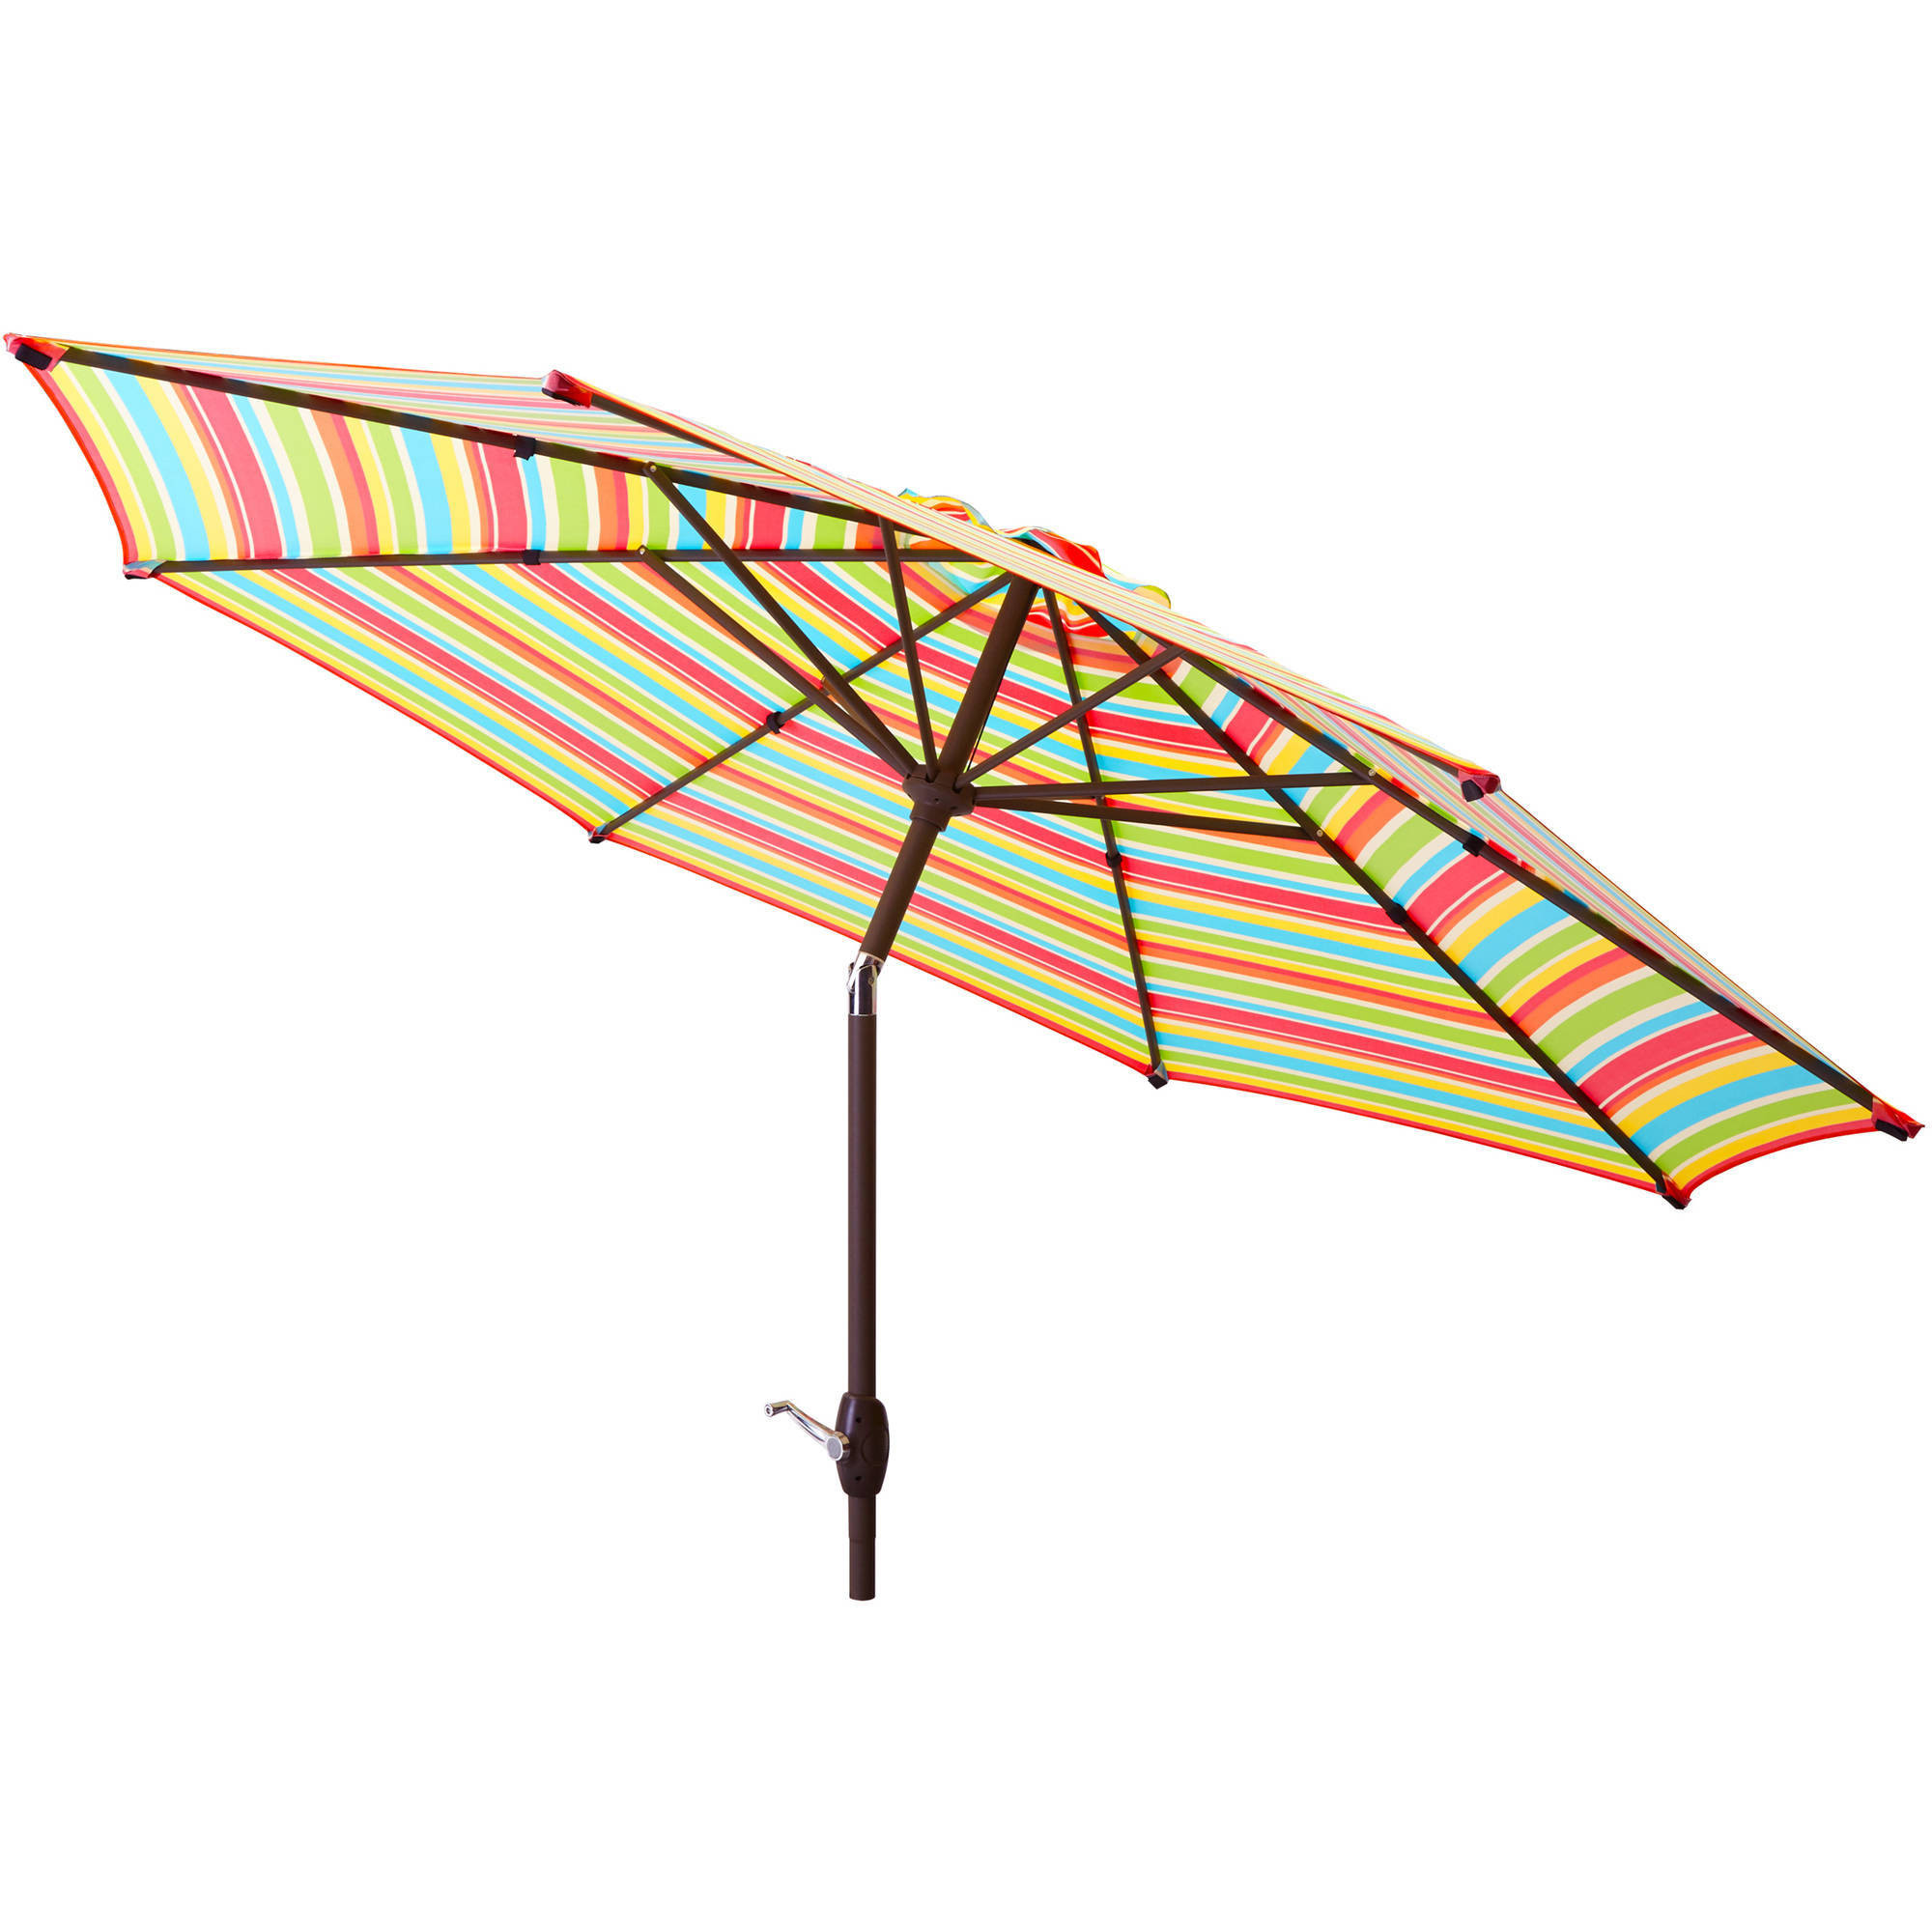 Best ideas about Walmart Patio Umbrella
. Save or Pin Patio Umbrella 9 Aluminum Patio Market Umbrella Tilt W Now.